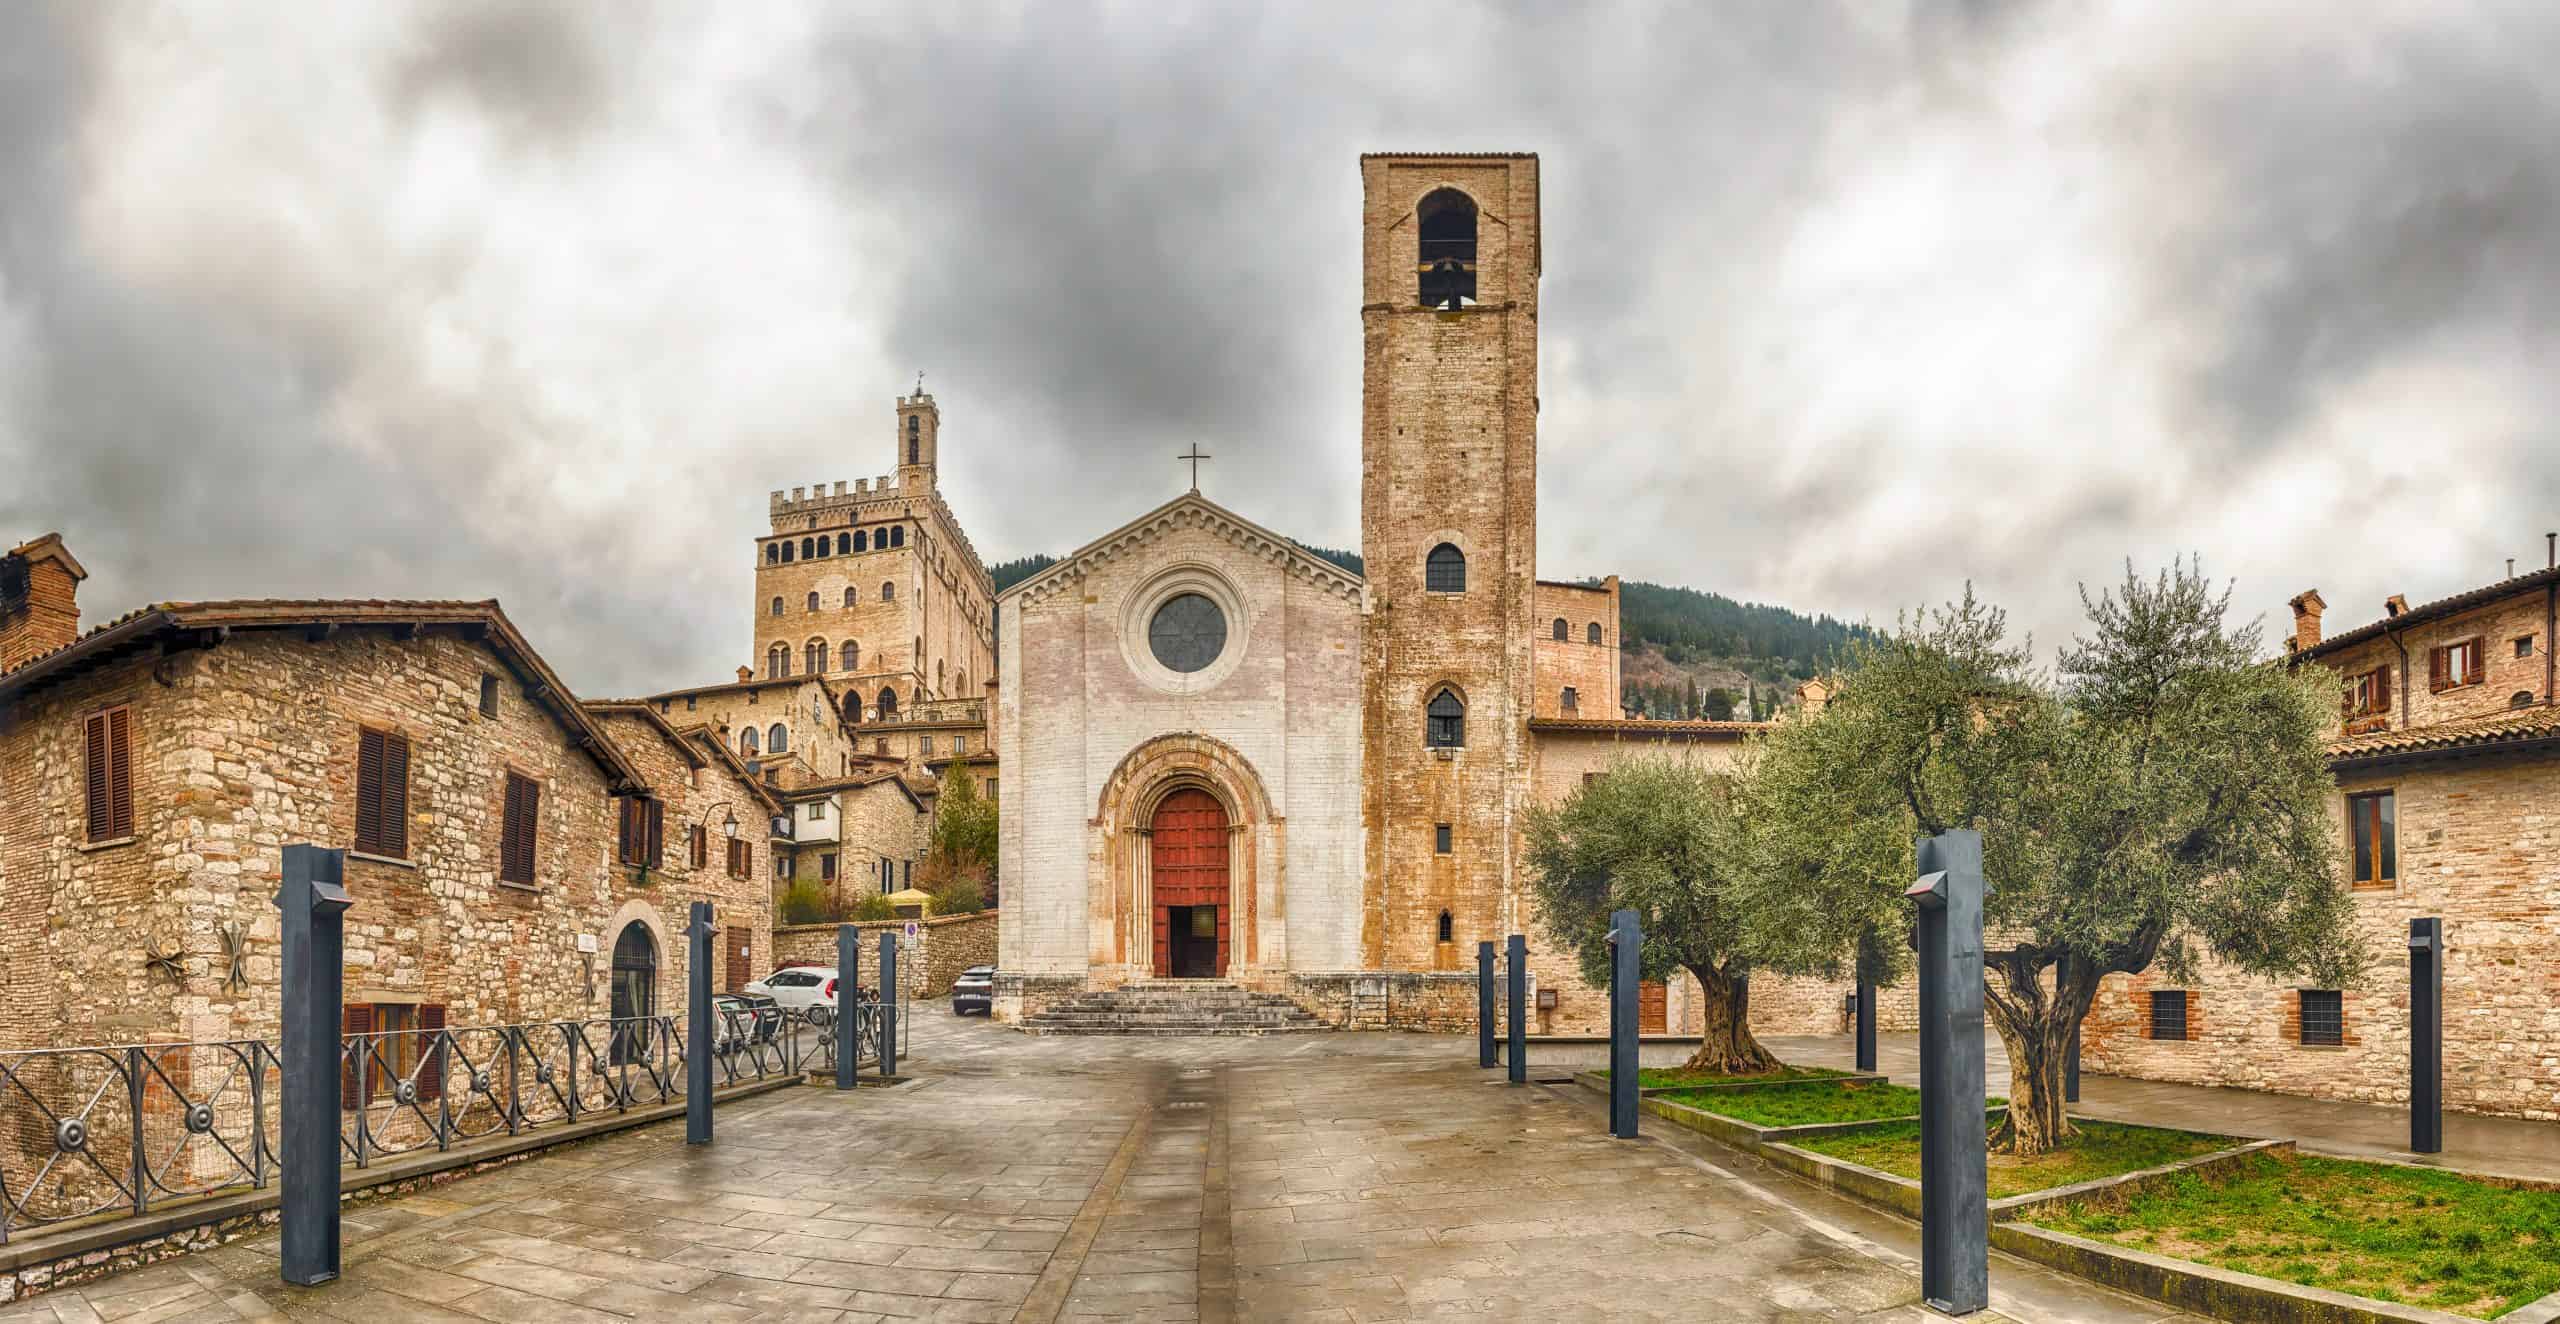 San Giovanni (Church of St. John the Baptist), Don Matteo's parish church